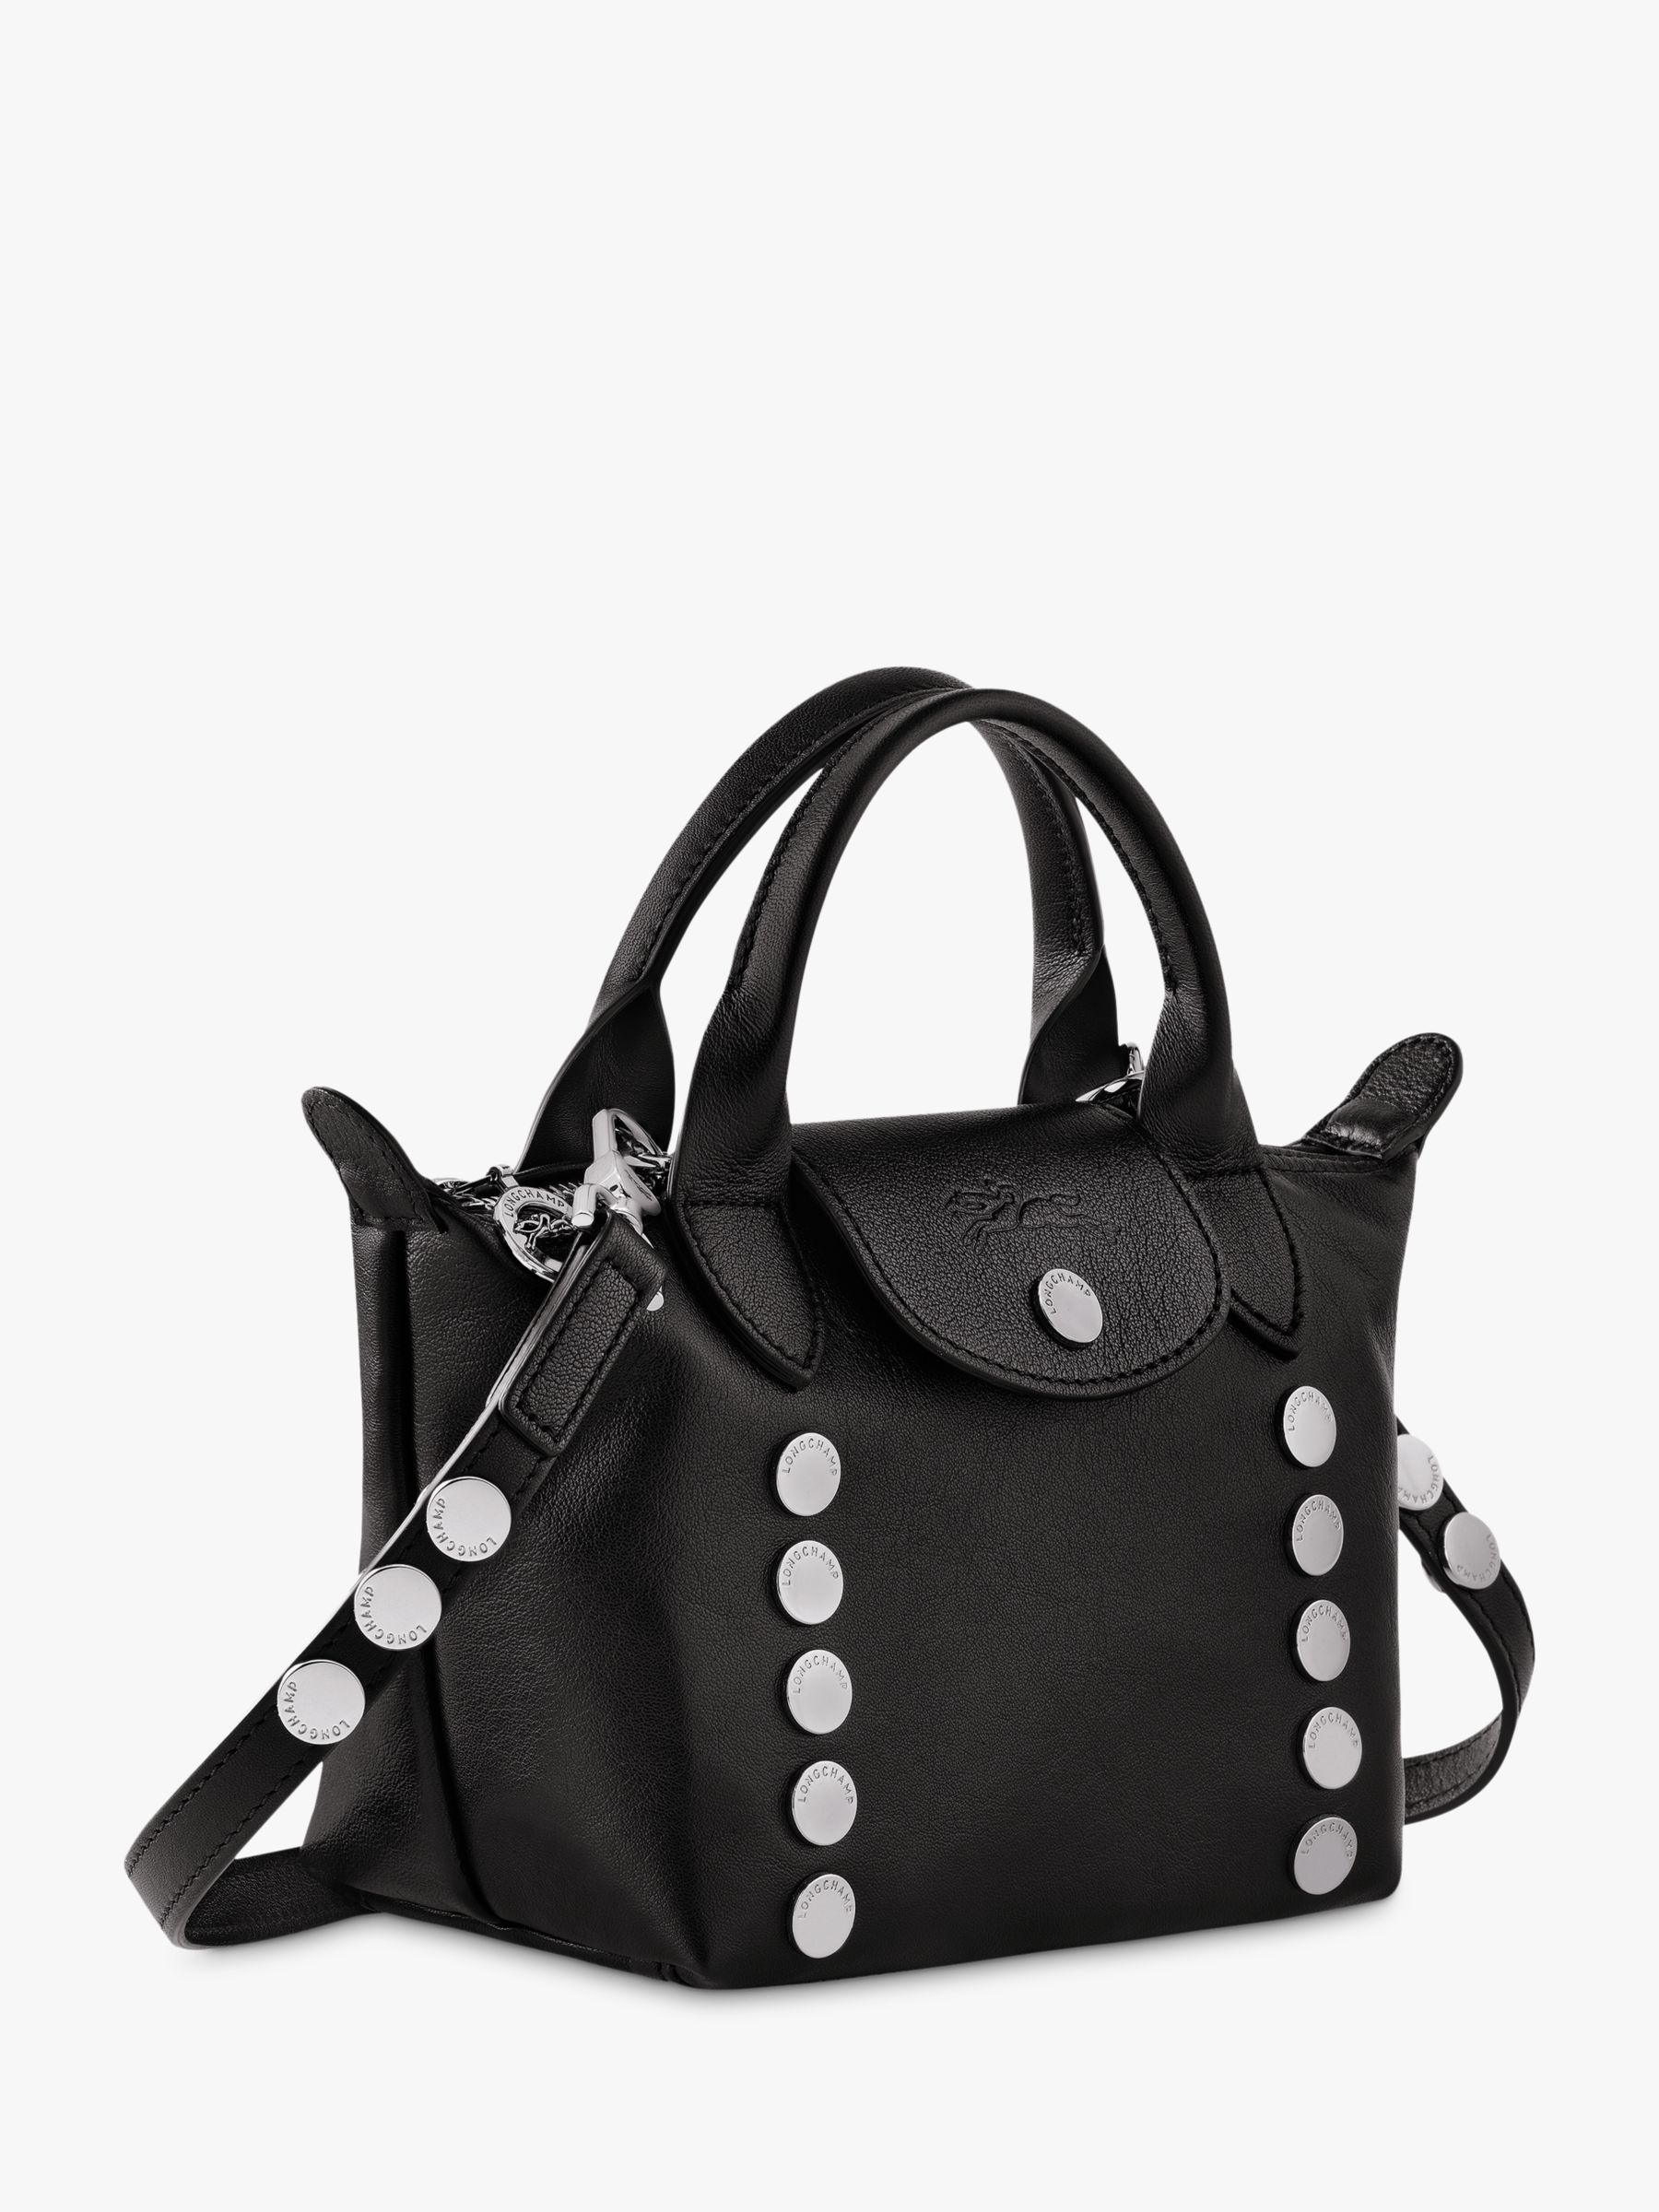 Longchamp Le Pliage Extra Small Top Handle Bag, Black